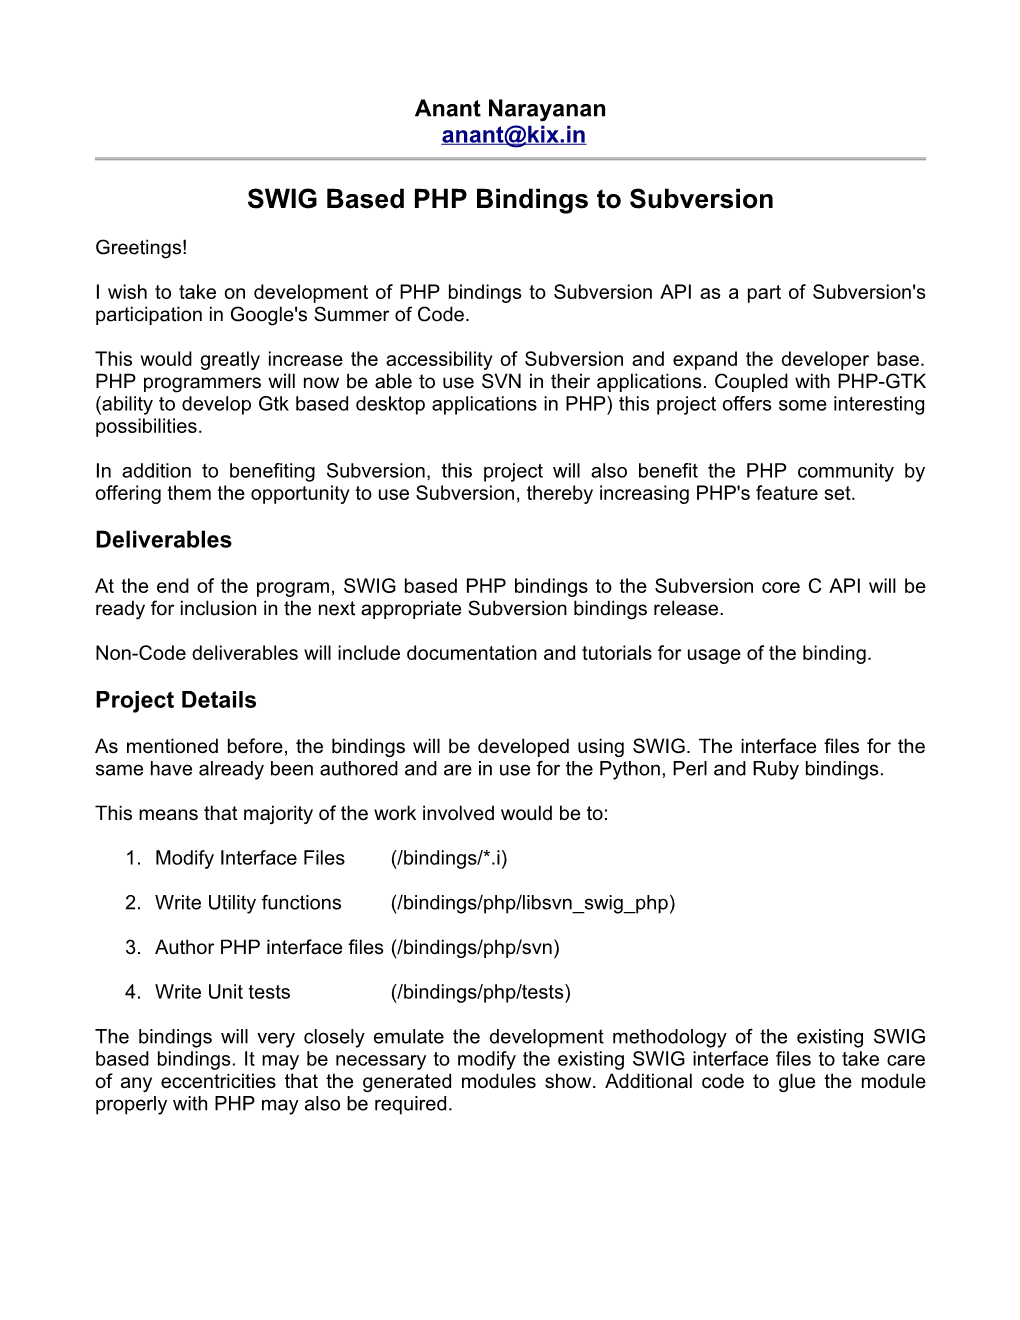 SWIG Based PHP Bindings to Subversion